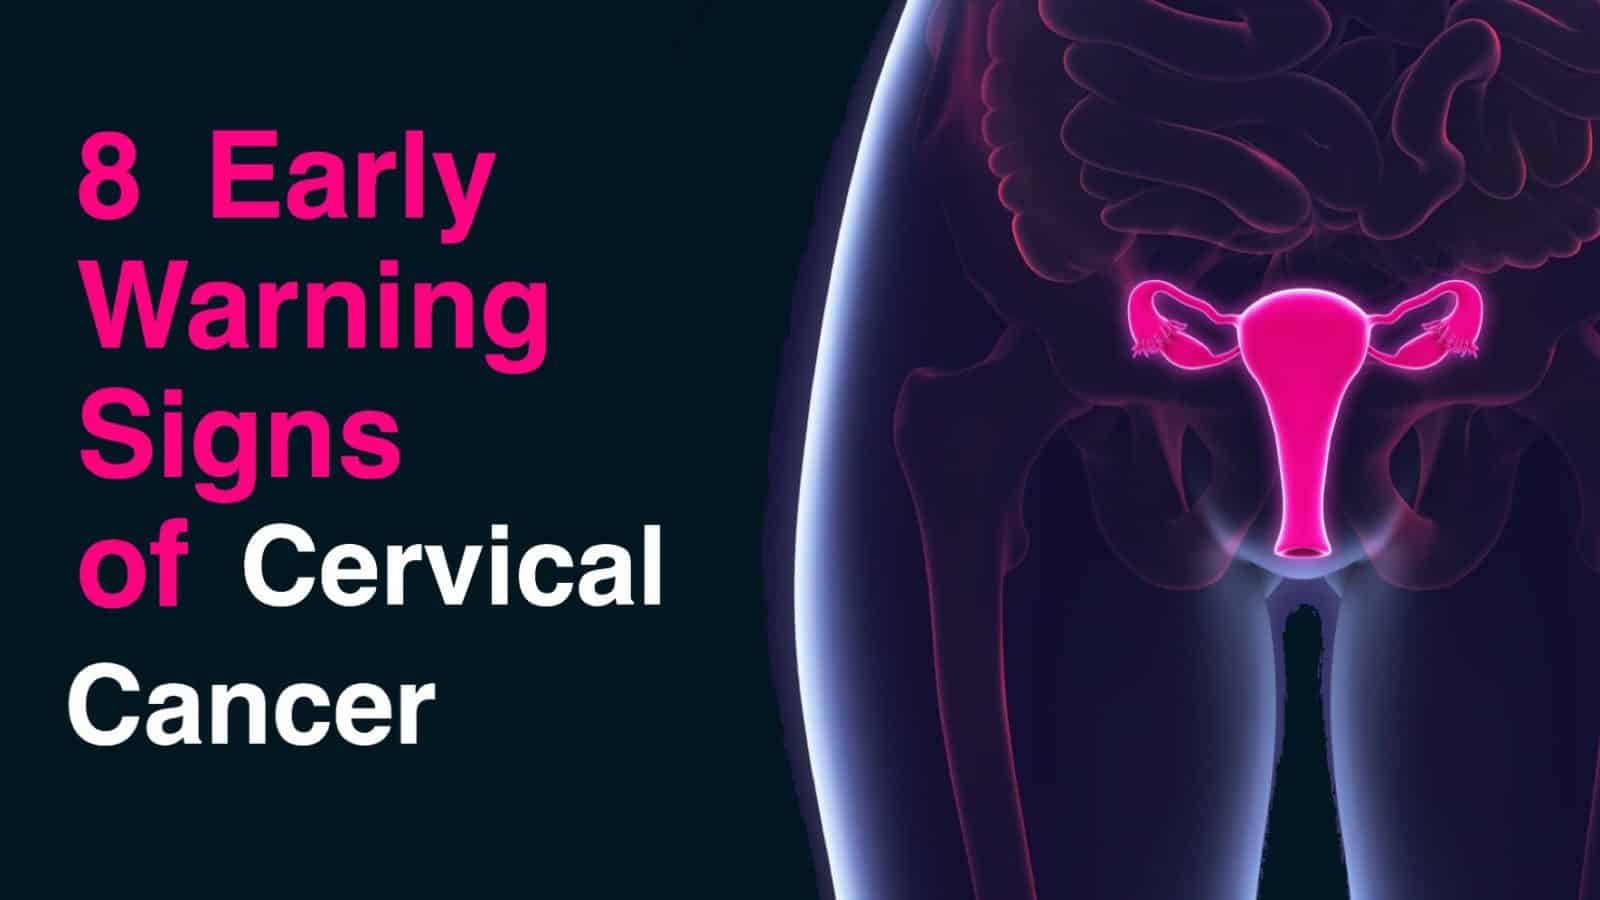 Cervical cancer warning signs of Warning Signs